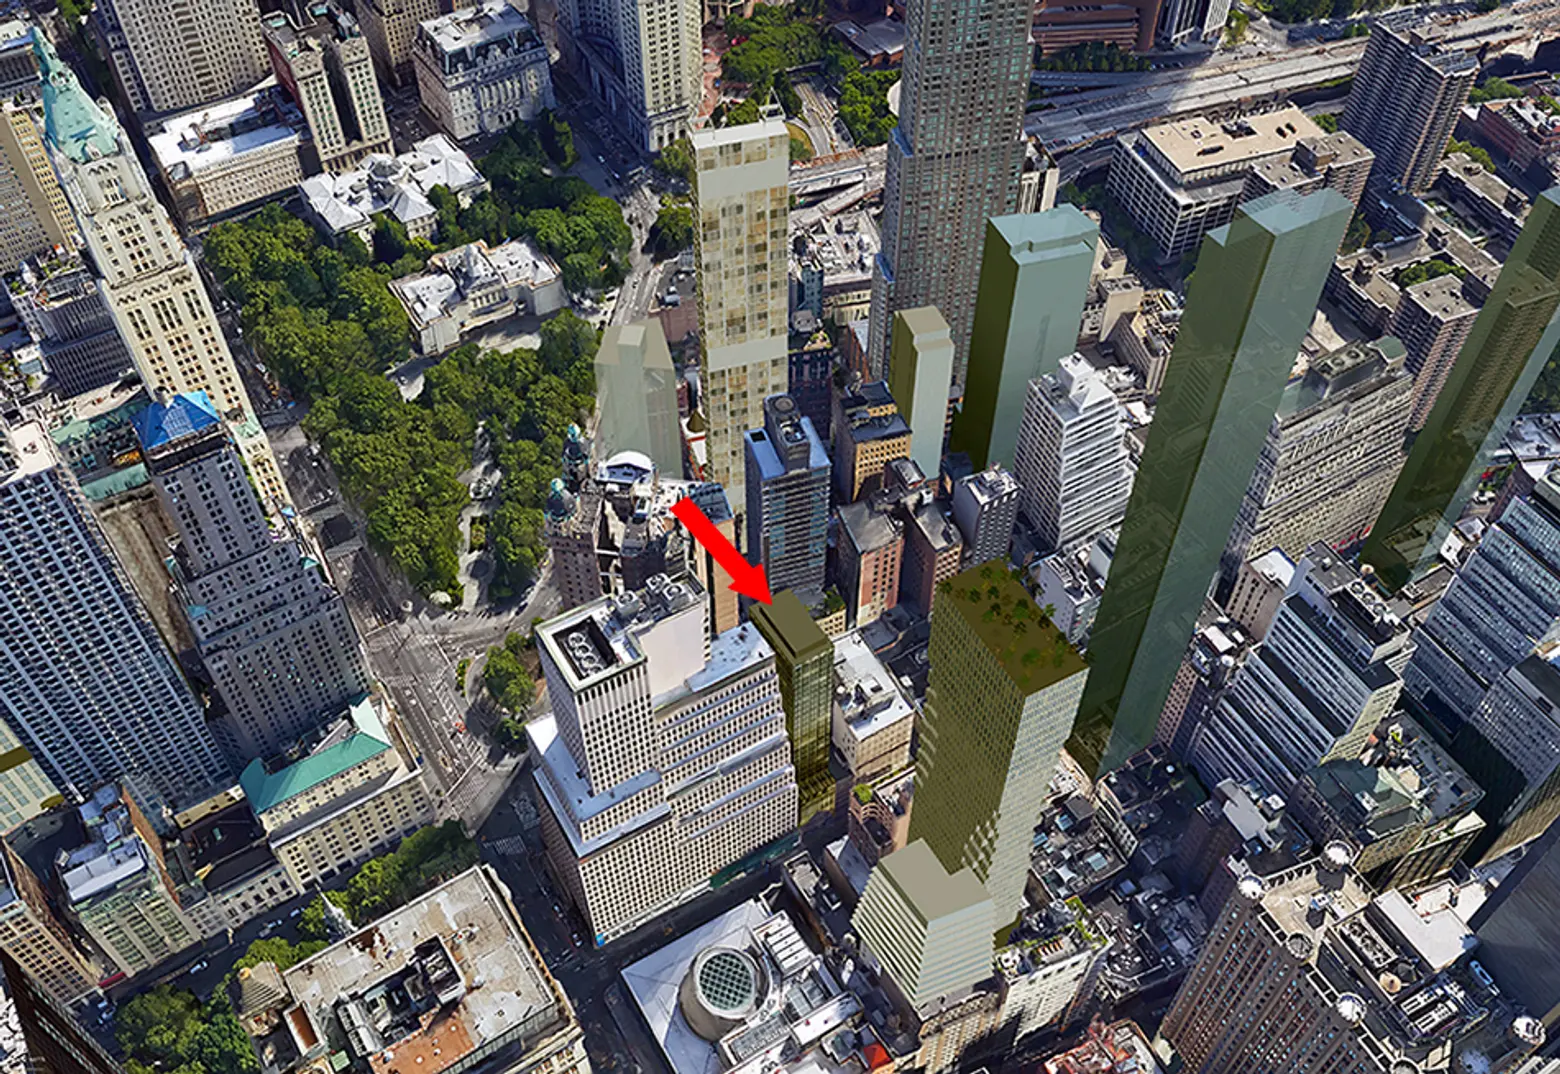 143 Fulton Street, Tribeca Associates, SLCE Architects, Financial District towers, Manhattan developments 